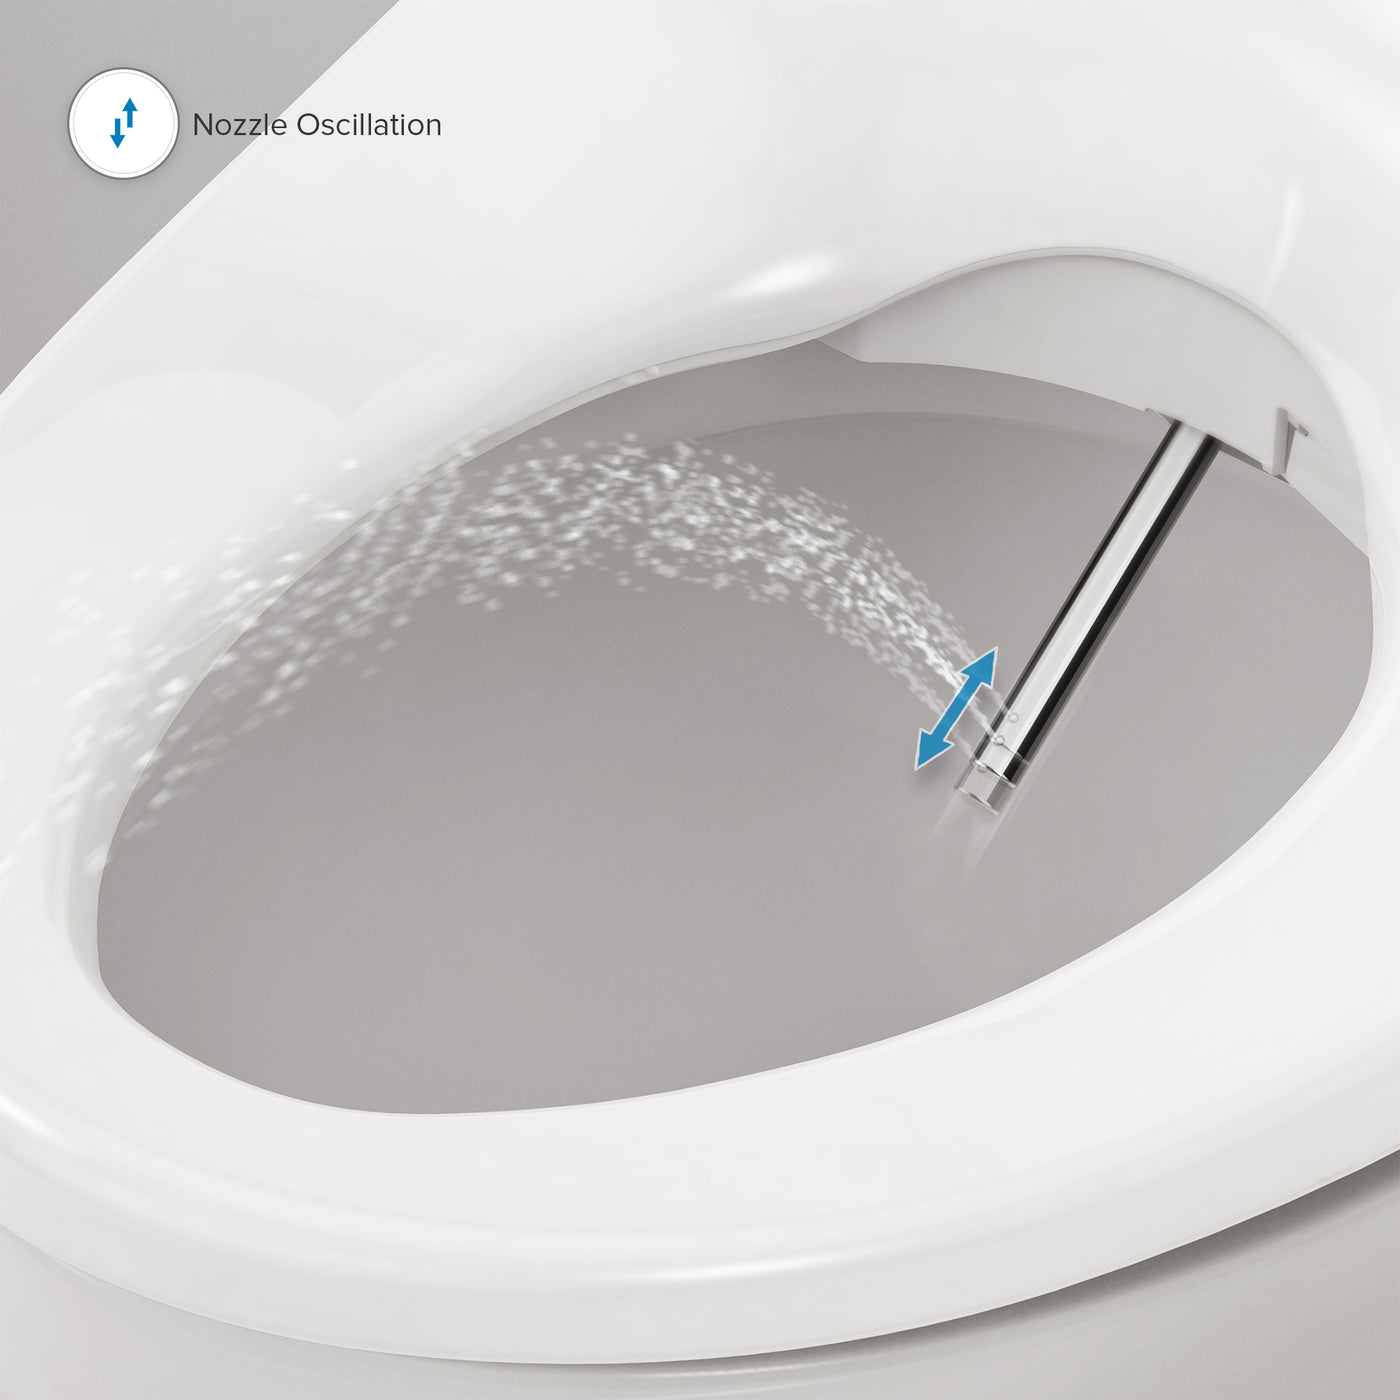 Brondell Swash 1400 Luxury Bidet Toilet Seat - Elongated - White